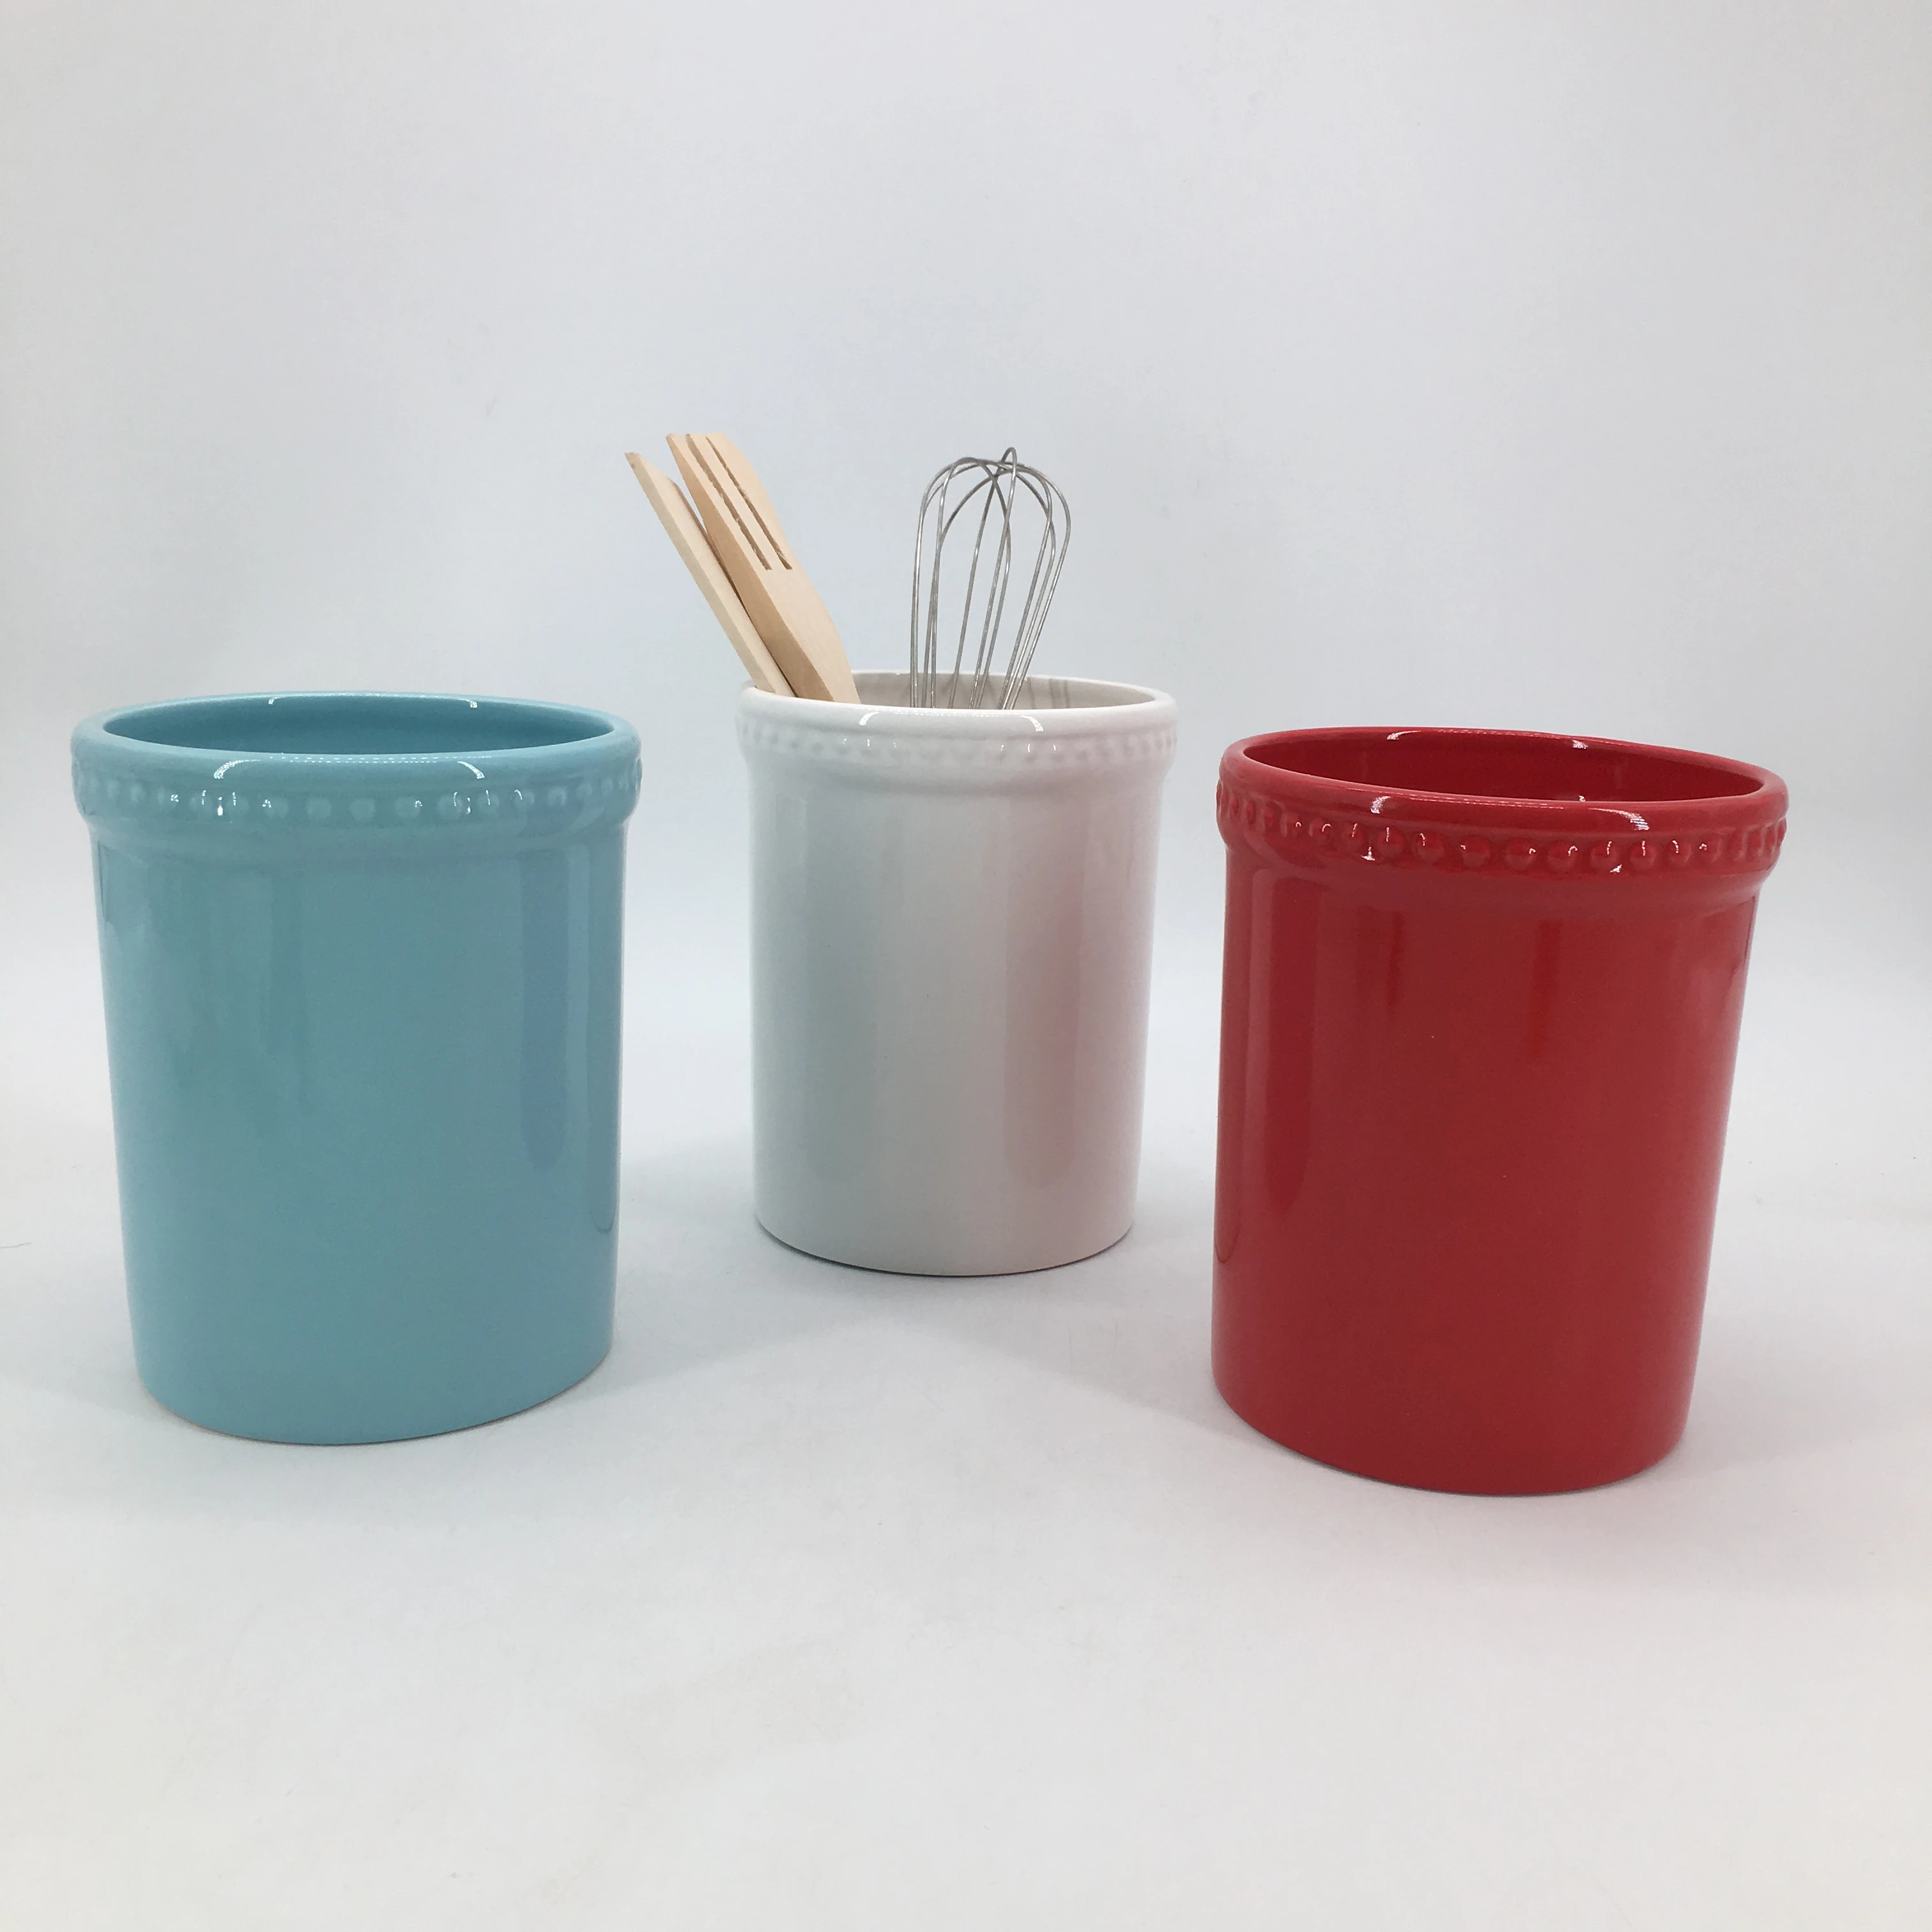 Wholesale colorful tableware round kitchen utensils organizer ceramic utensil holder for cooking tools